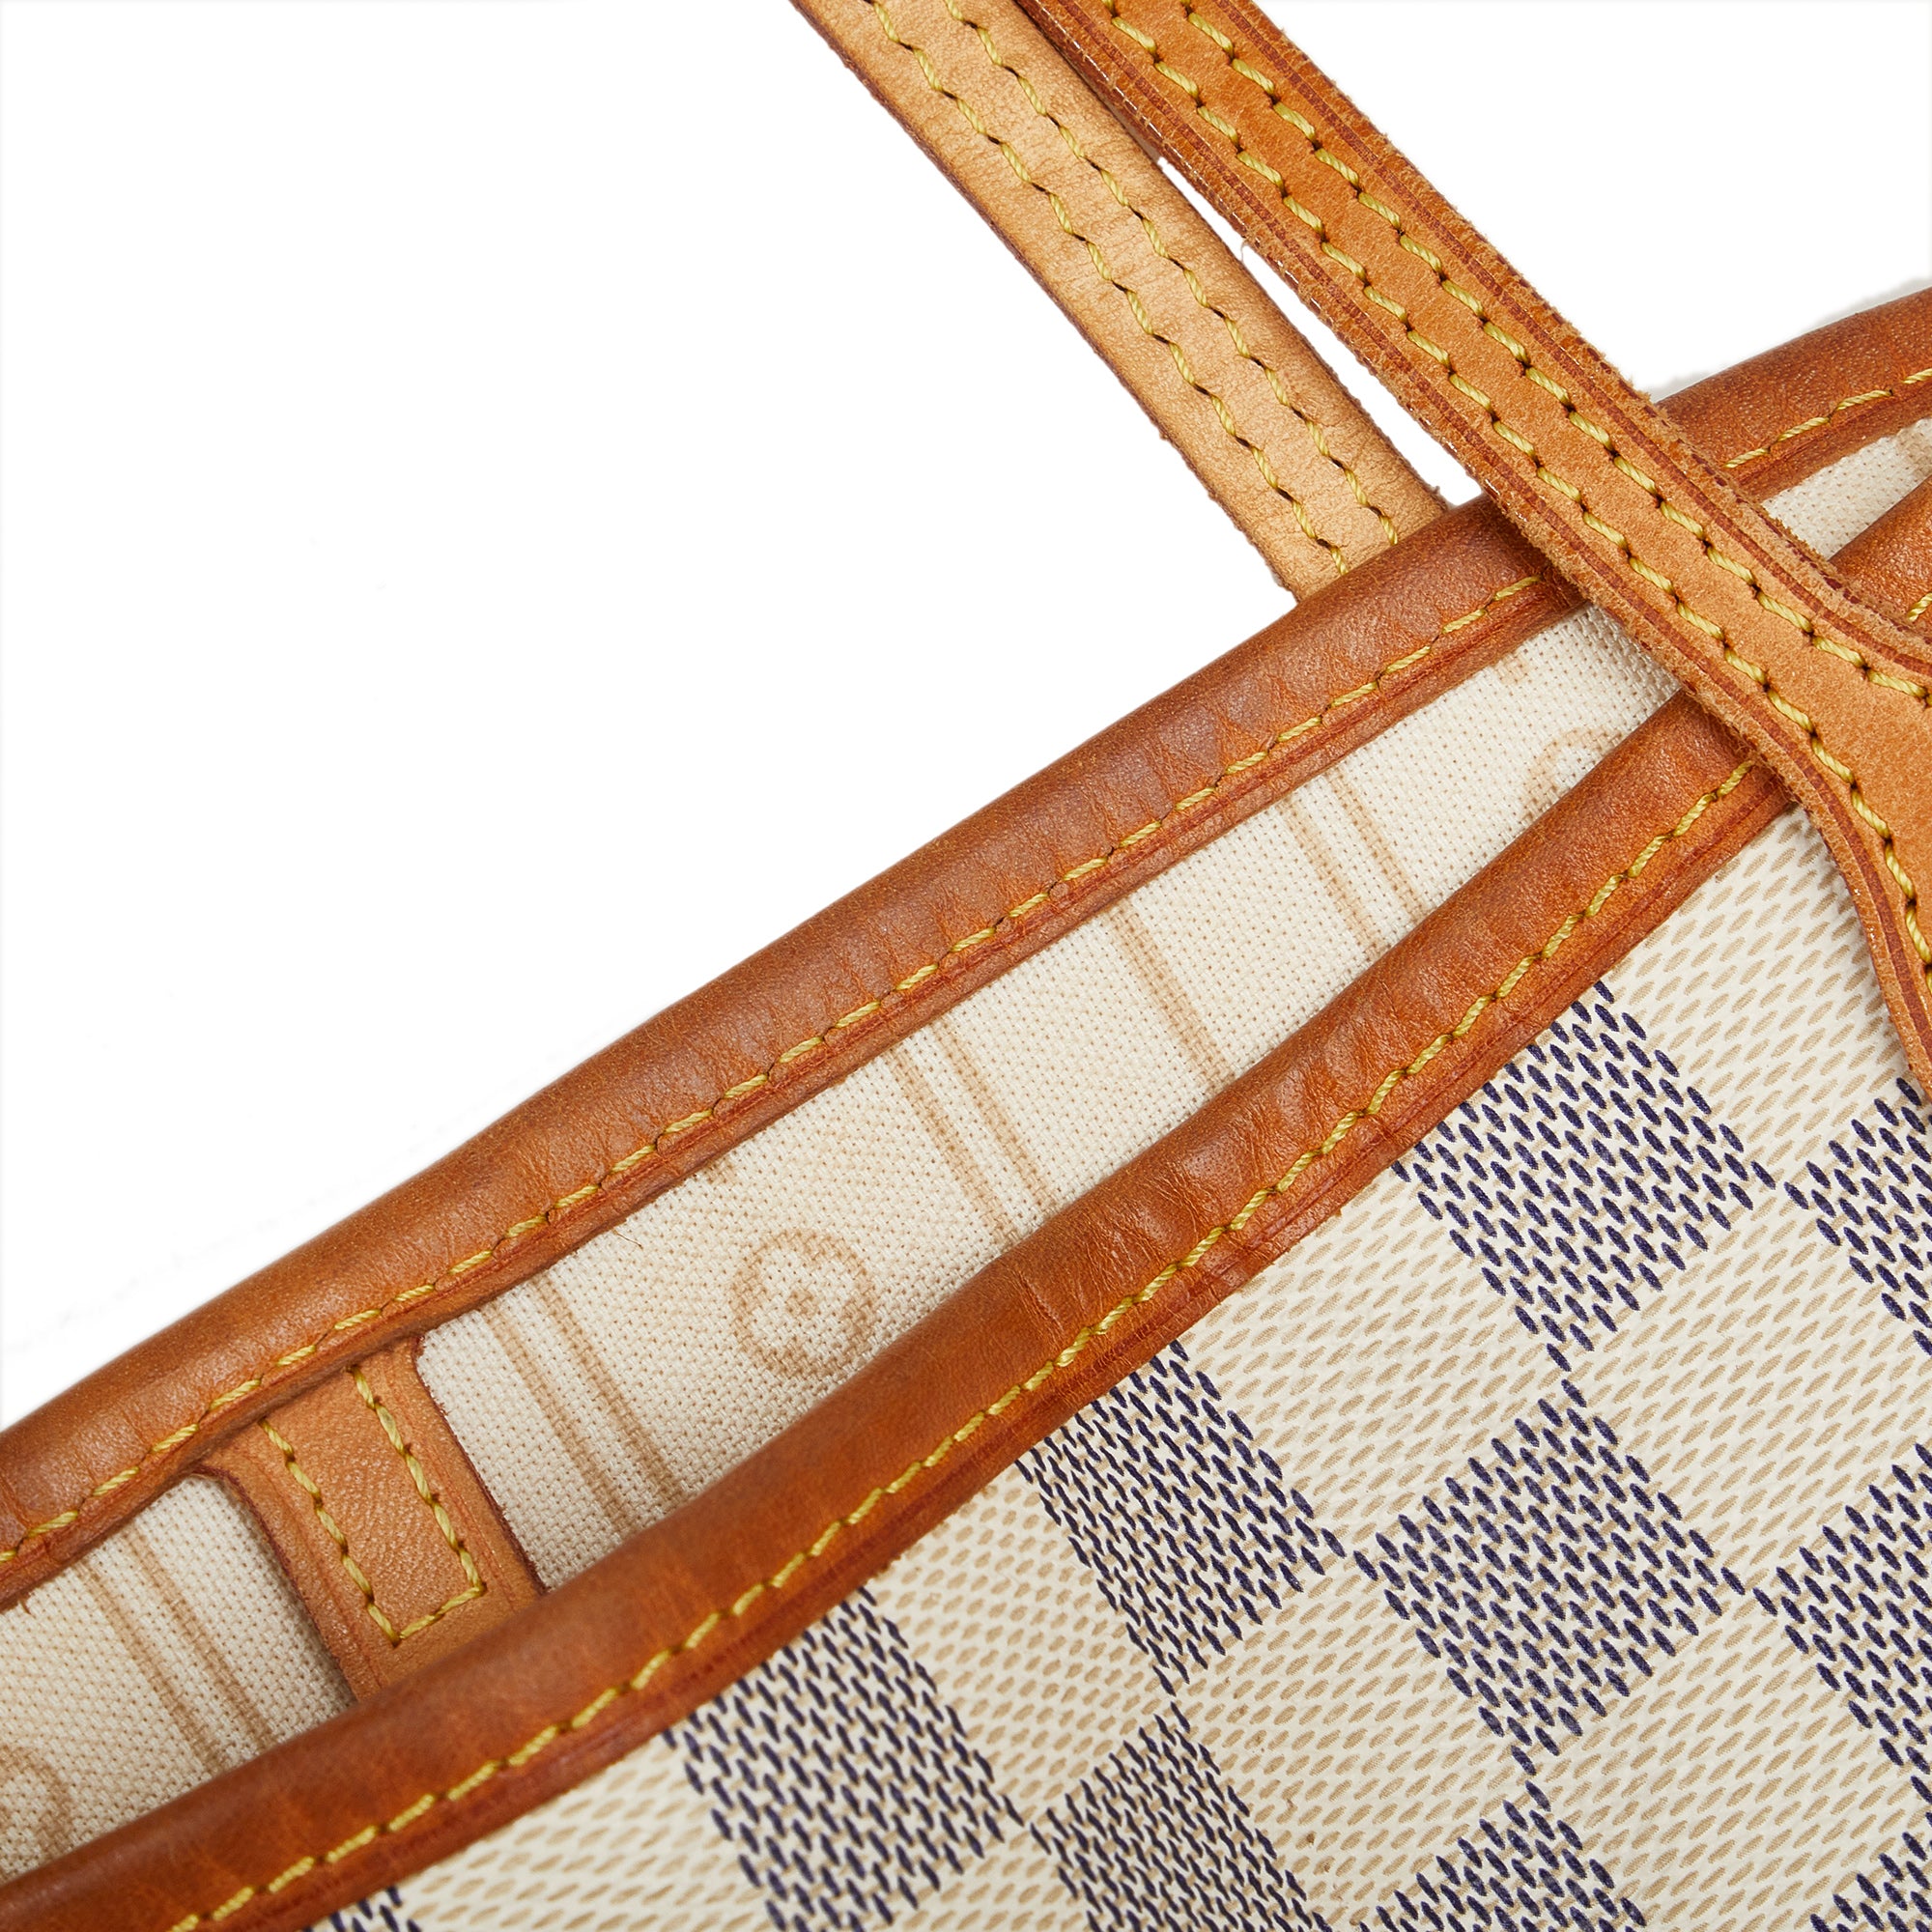 Louis Vuitton DAMIER GRAPHITE Other Plaid Patterns 2WAY Leather